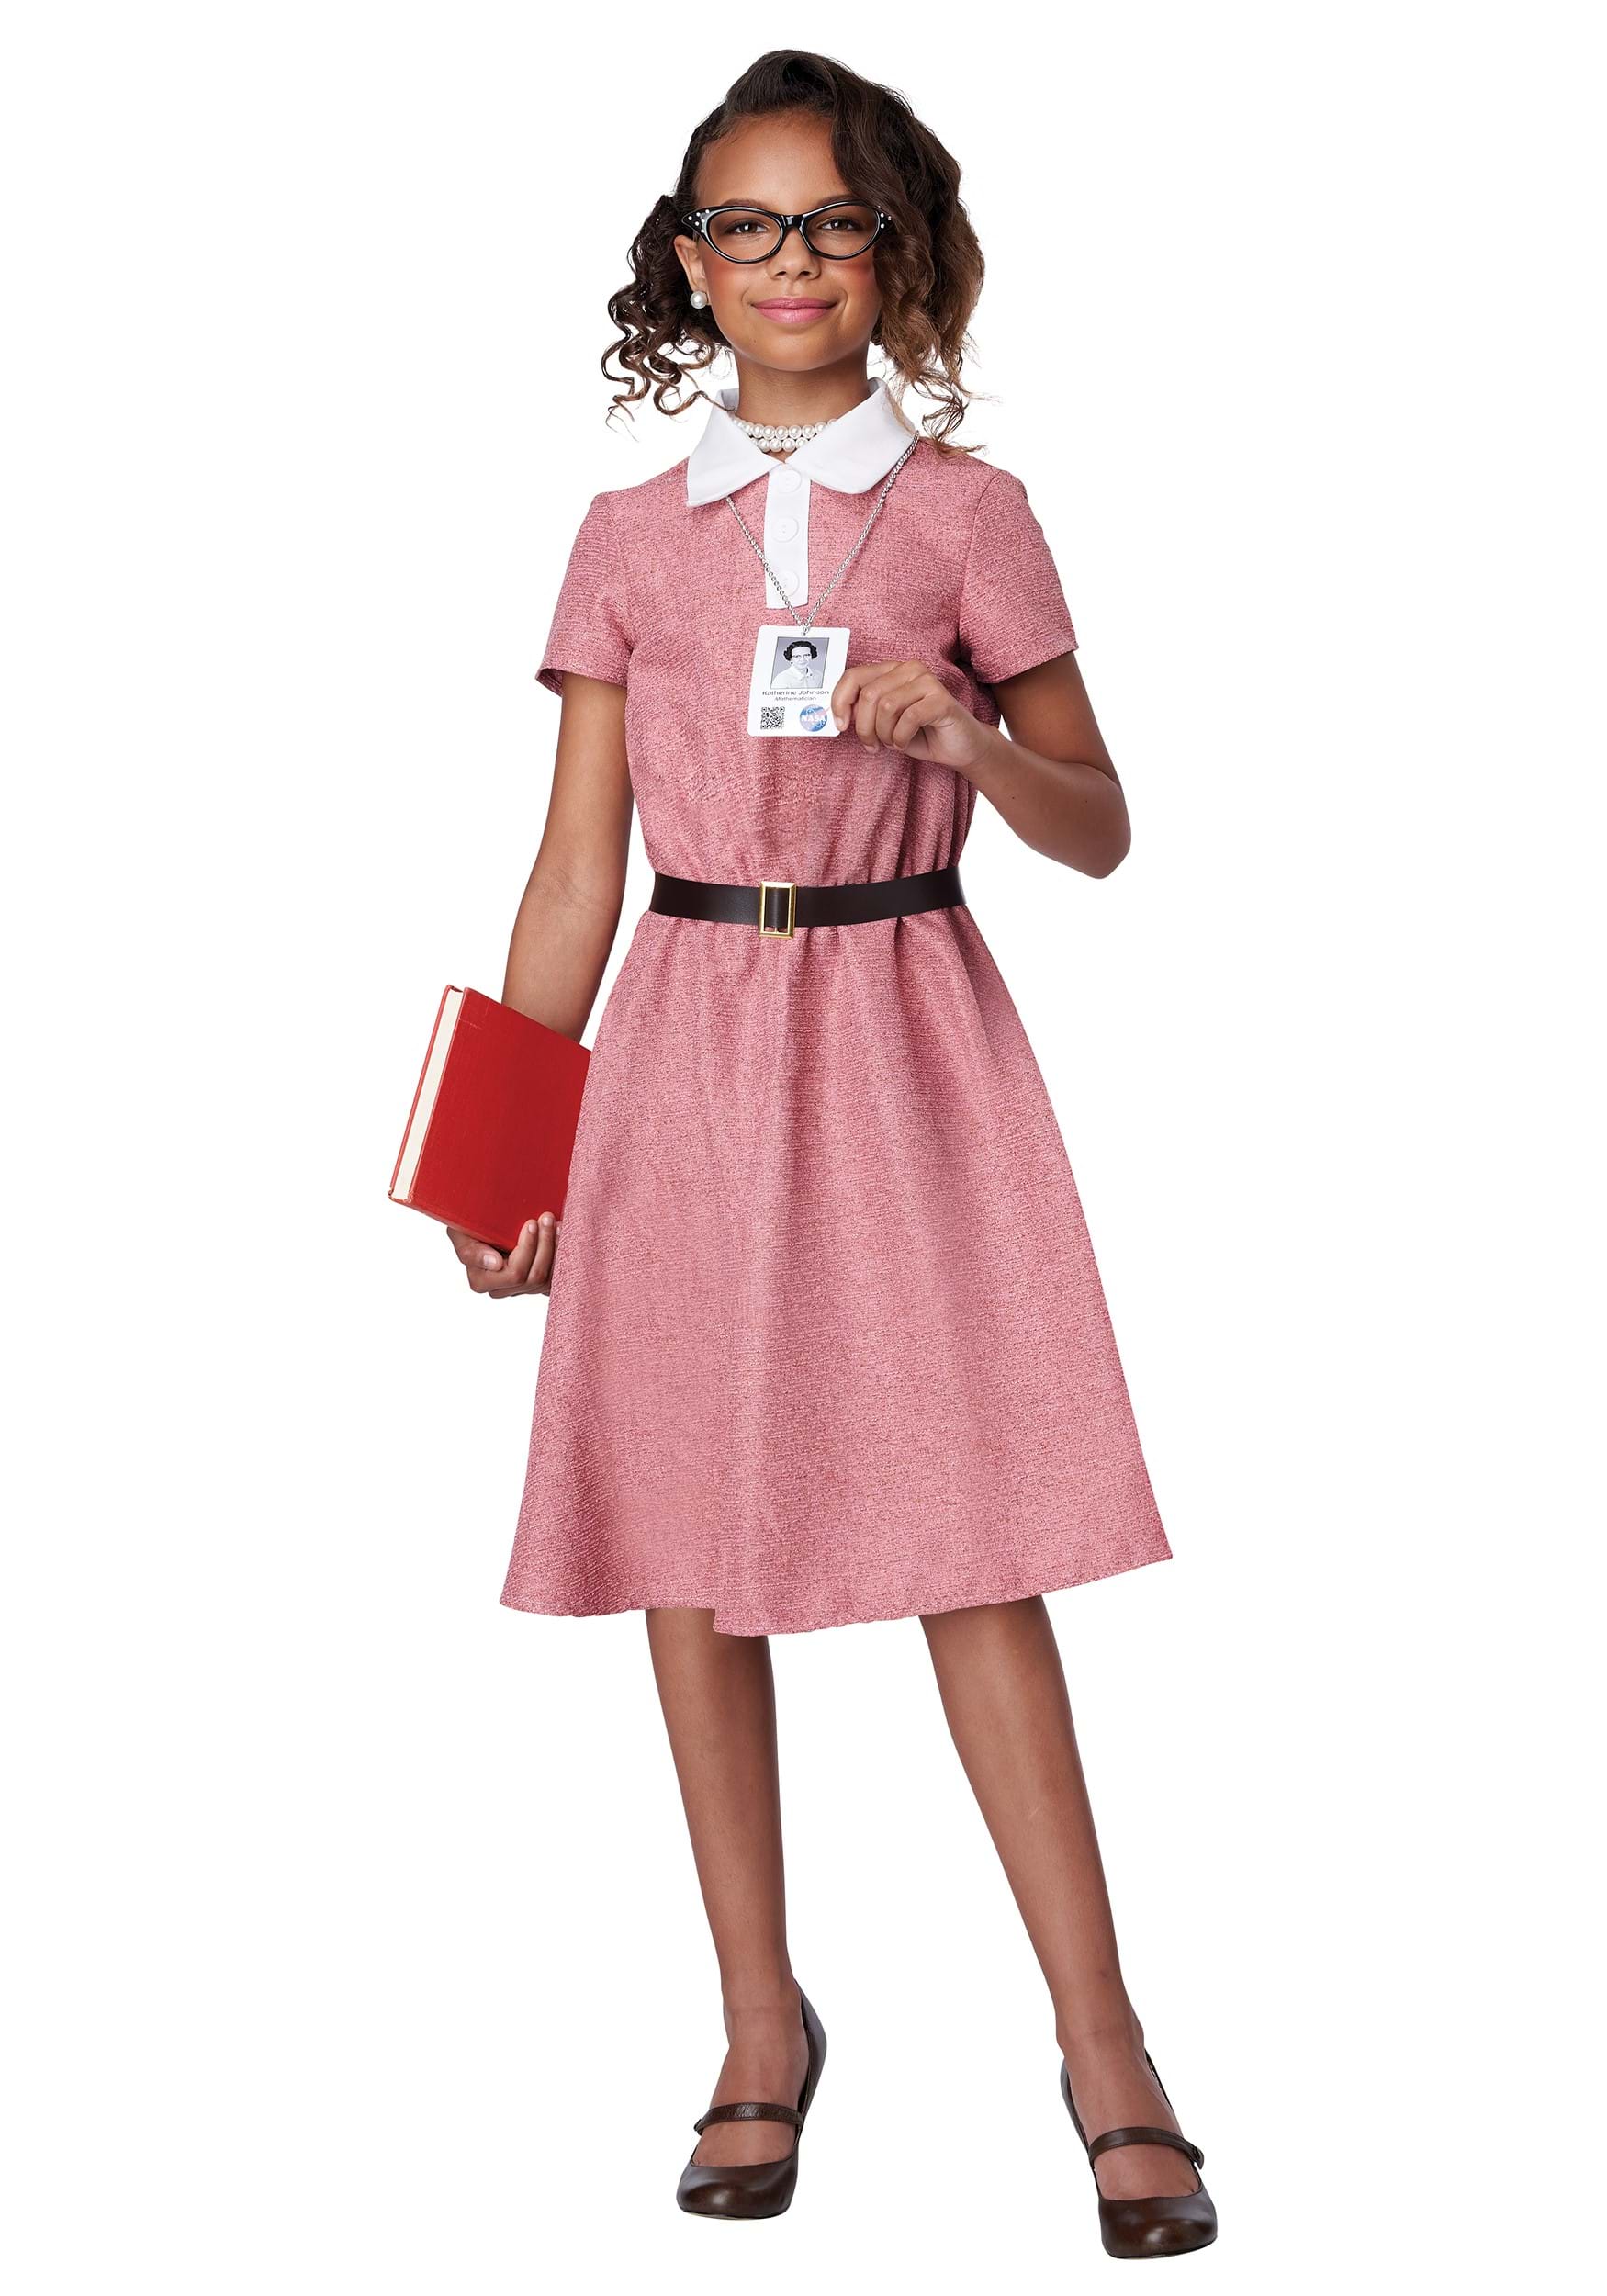 Aerospace Mathematician Child Girls Costume